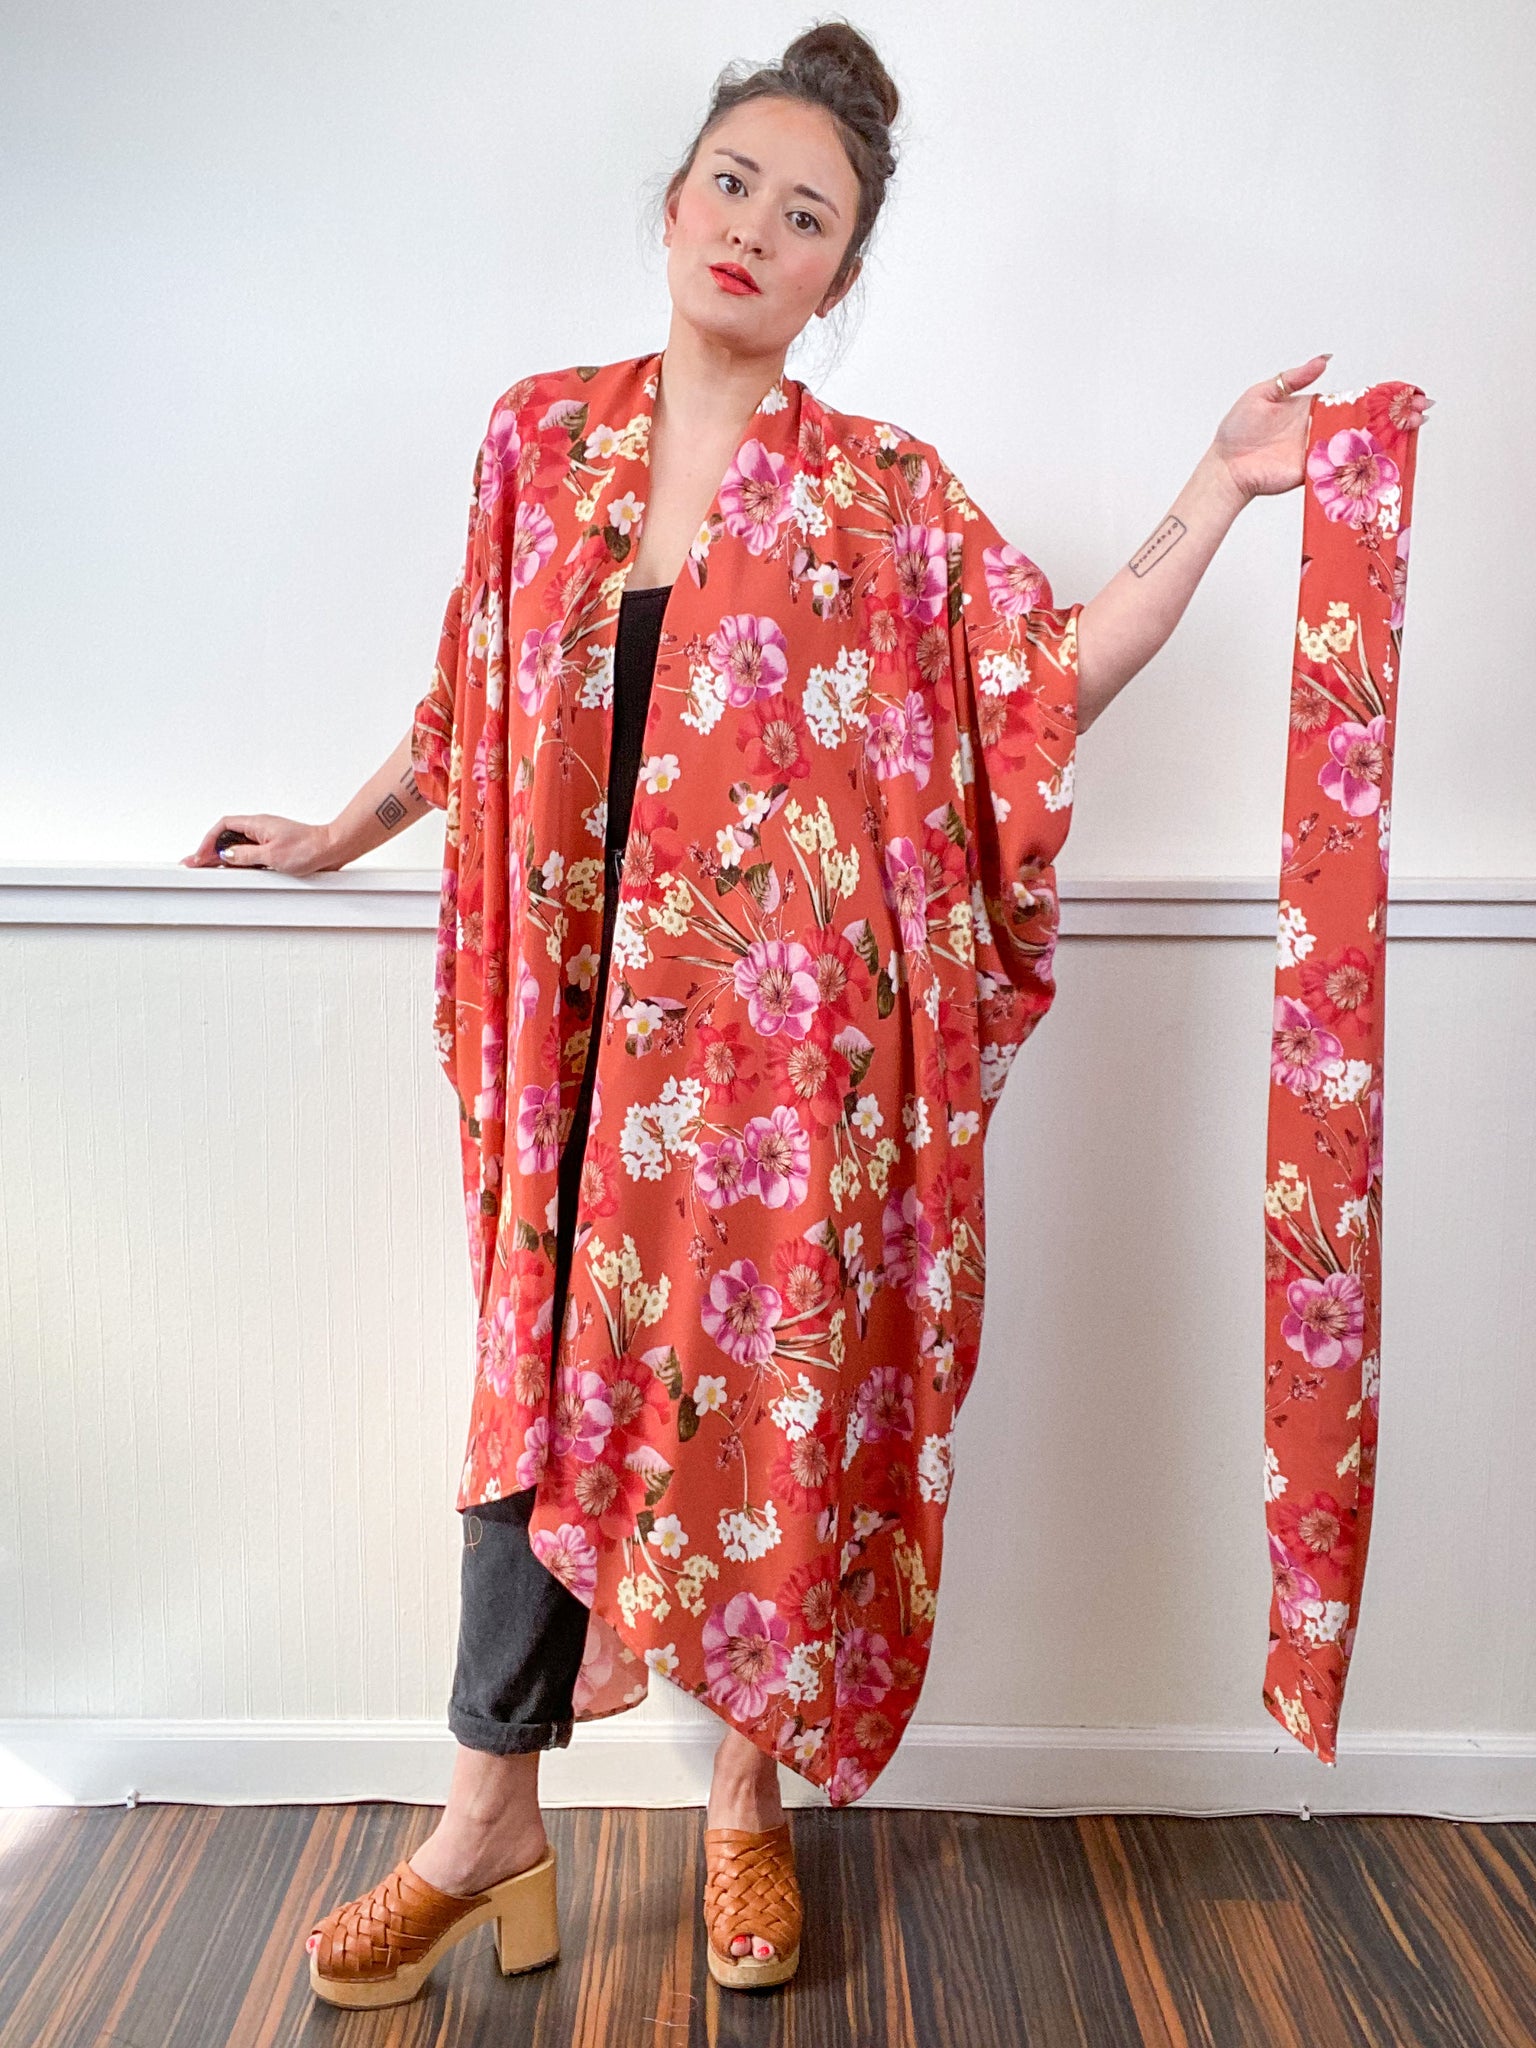 Print High Low Kimono Orange Floral Crepe